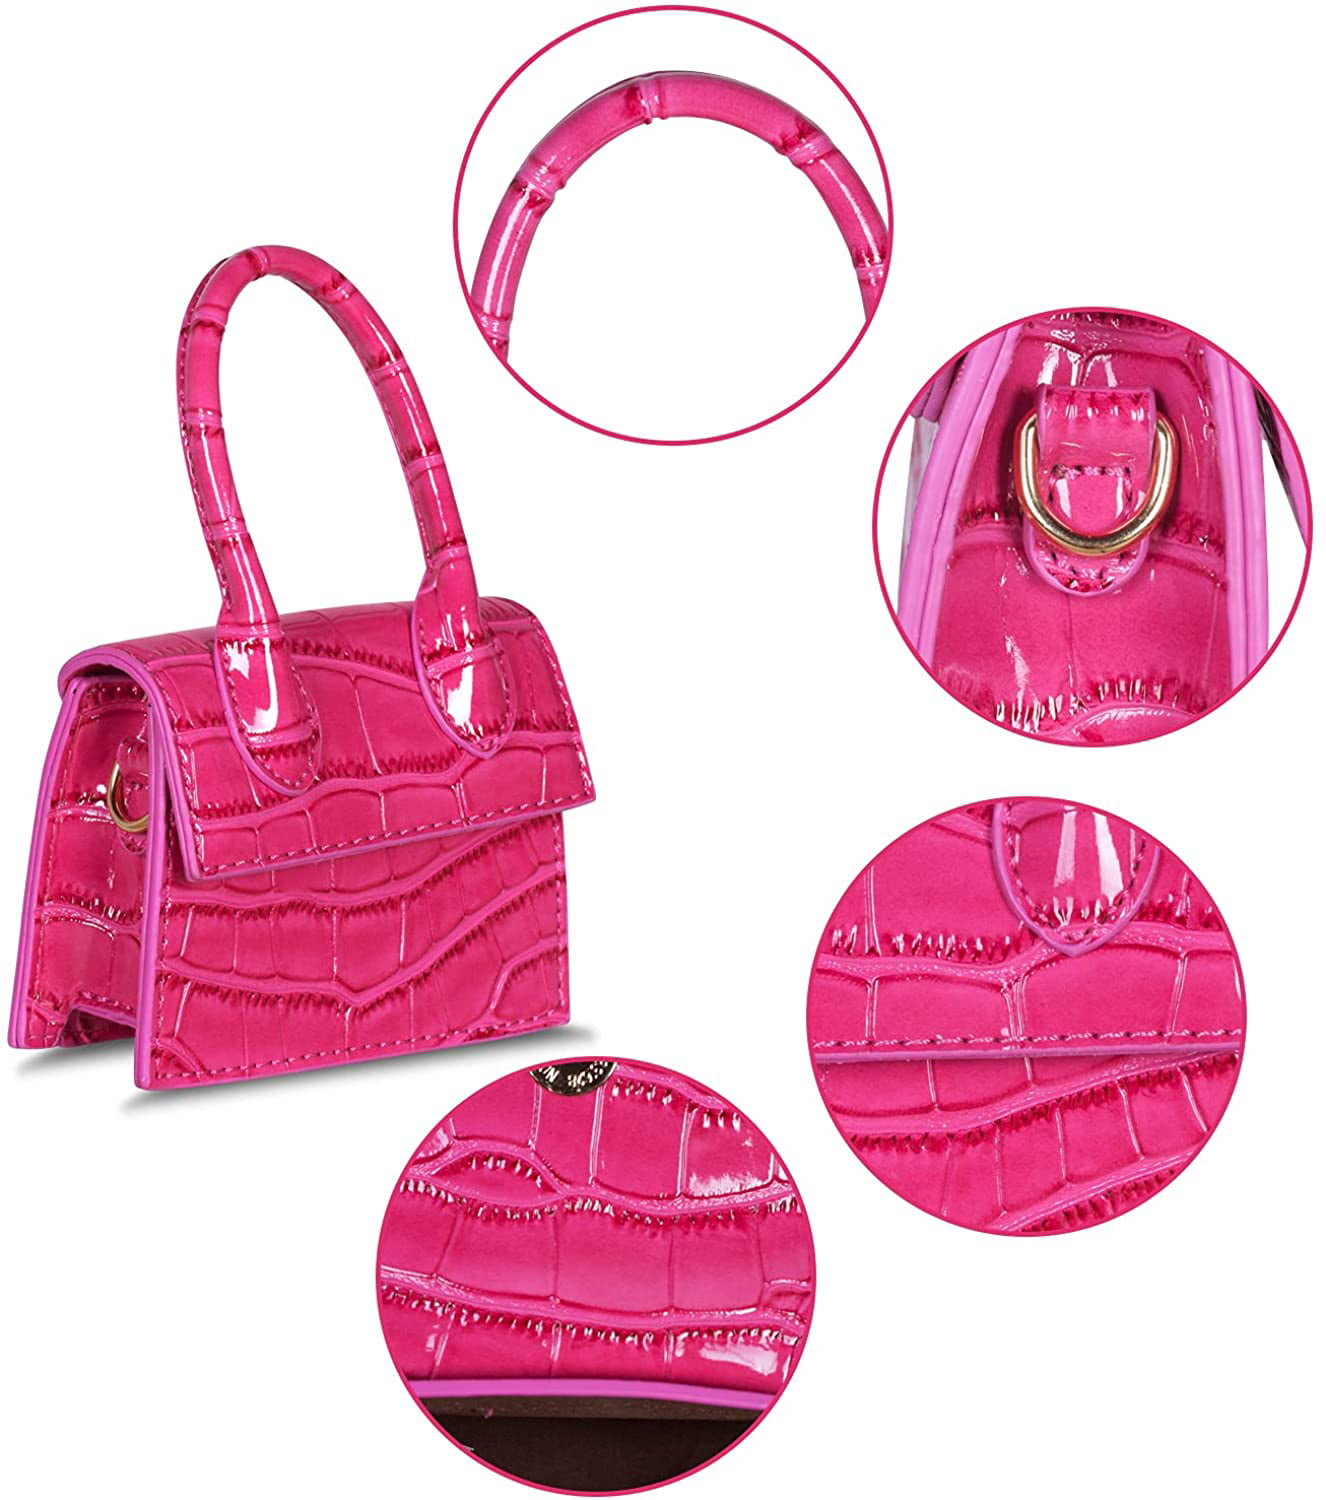 NIUEIMEE Mini Purse for Women Girls Top Handle Clutch Handbag Crossbody Bags 